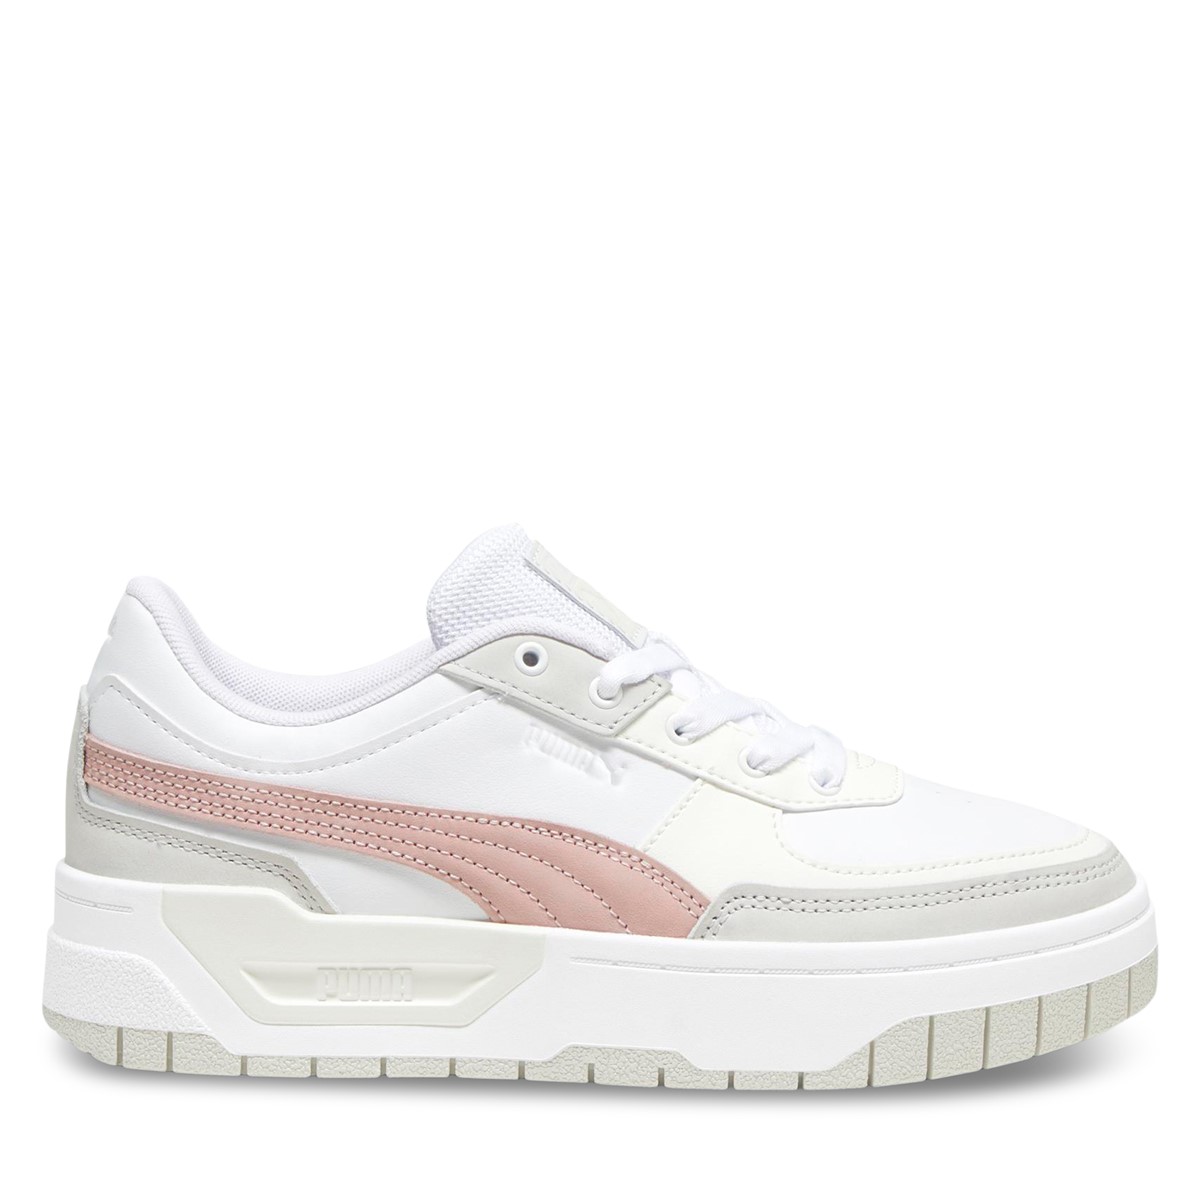 Women's Cali Dream Platform Sneakers in White/Grey/Pink